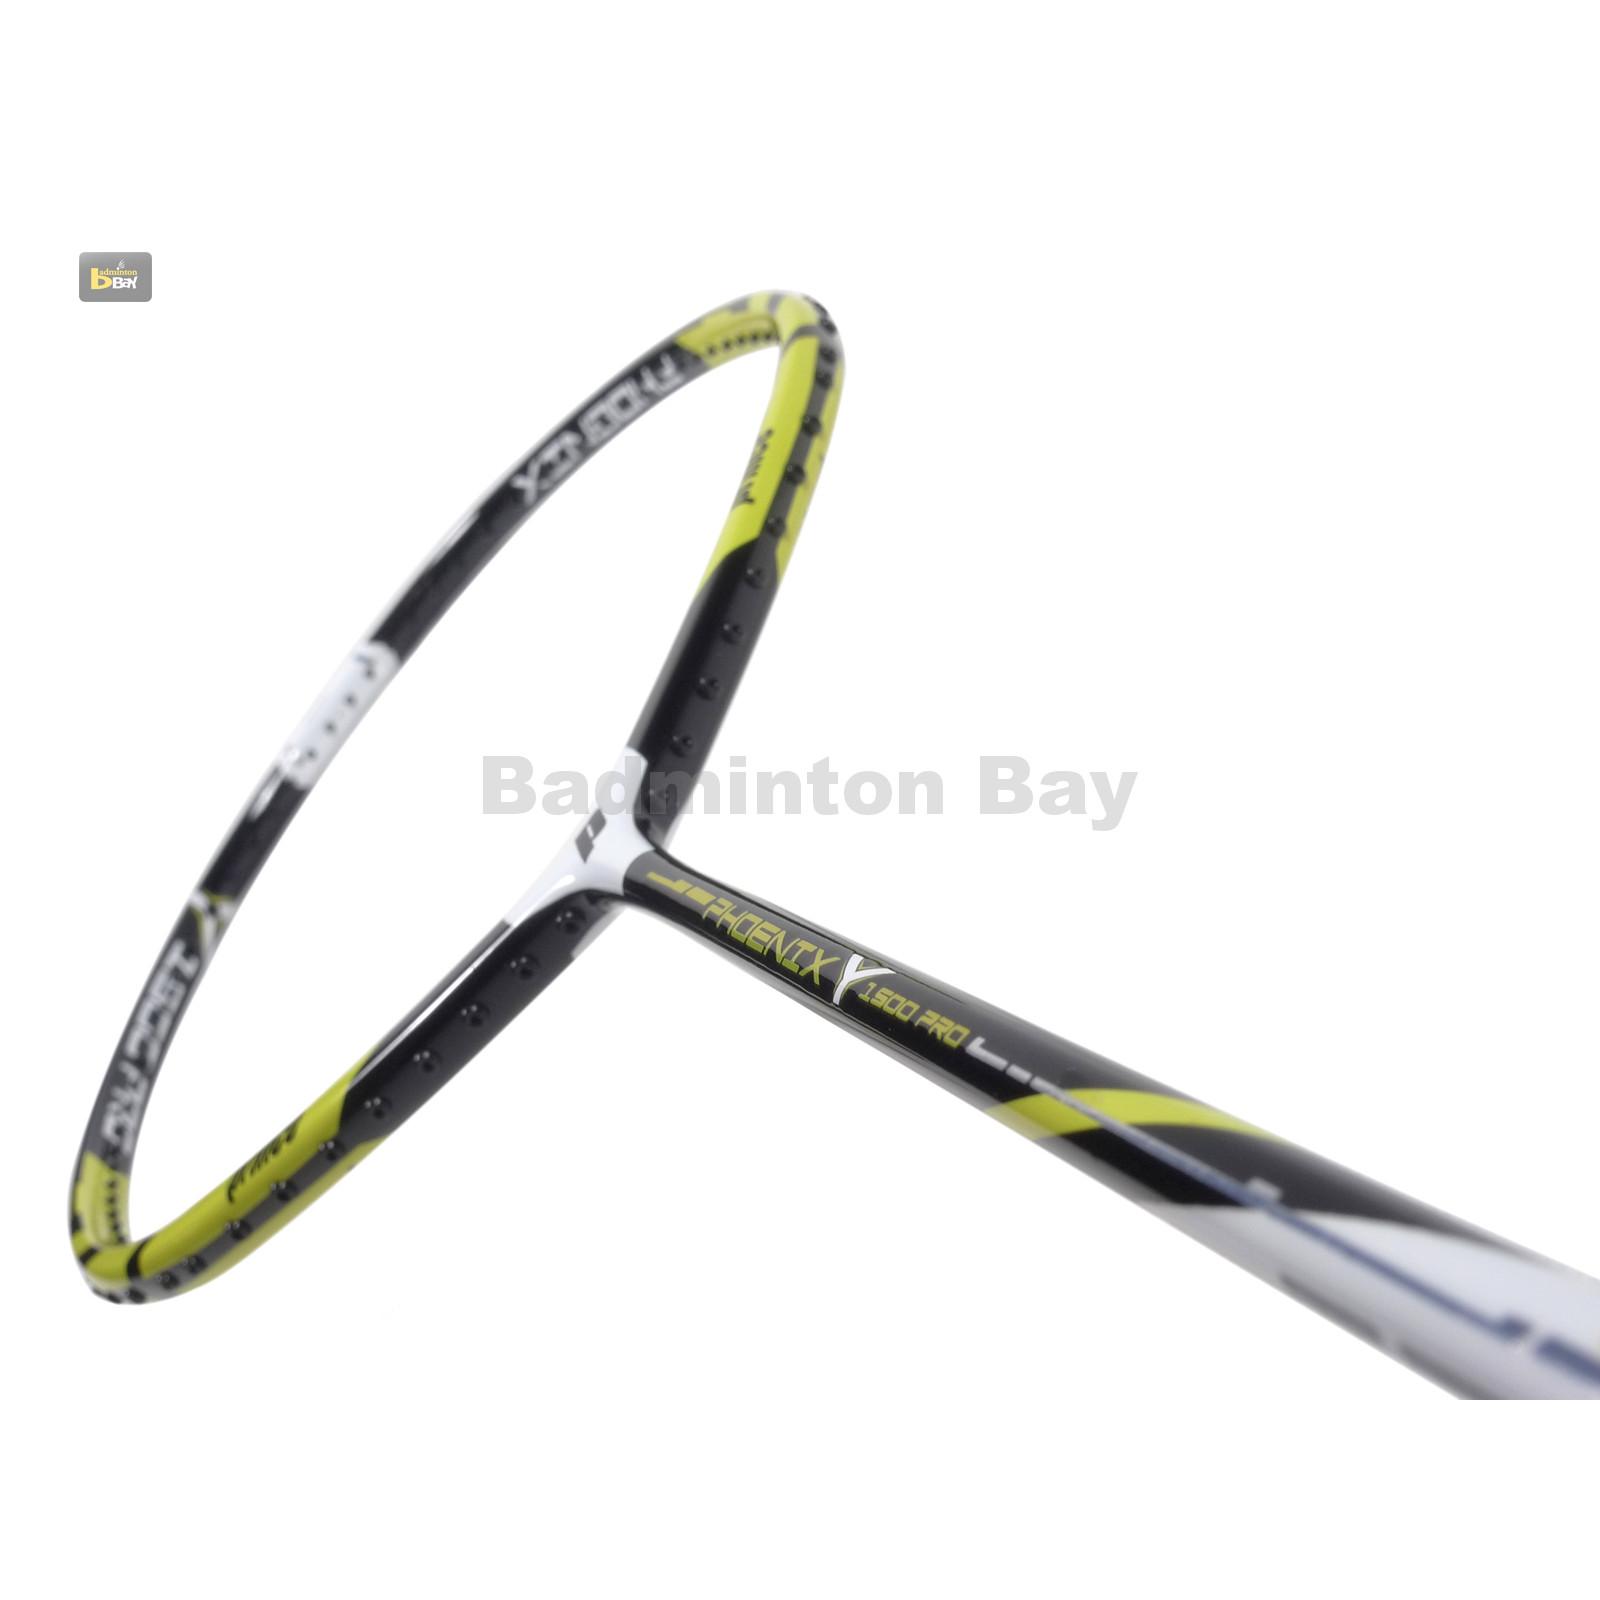 badminton racket review